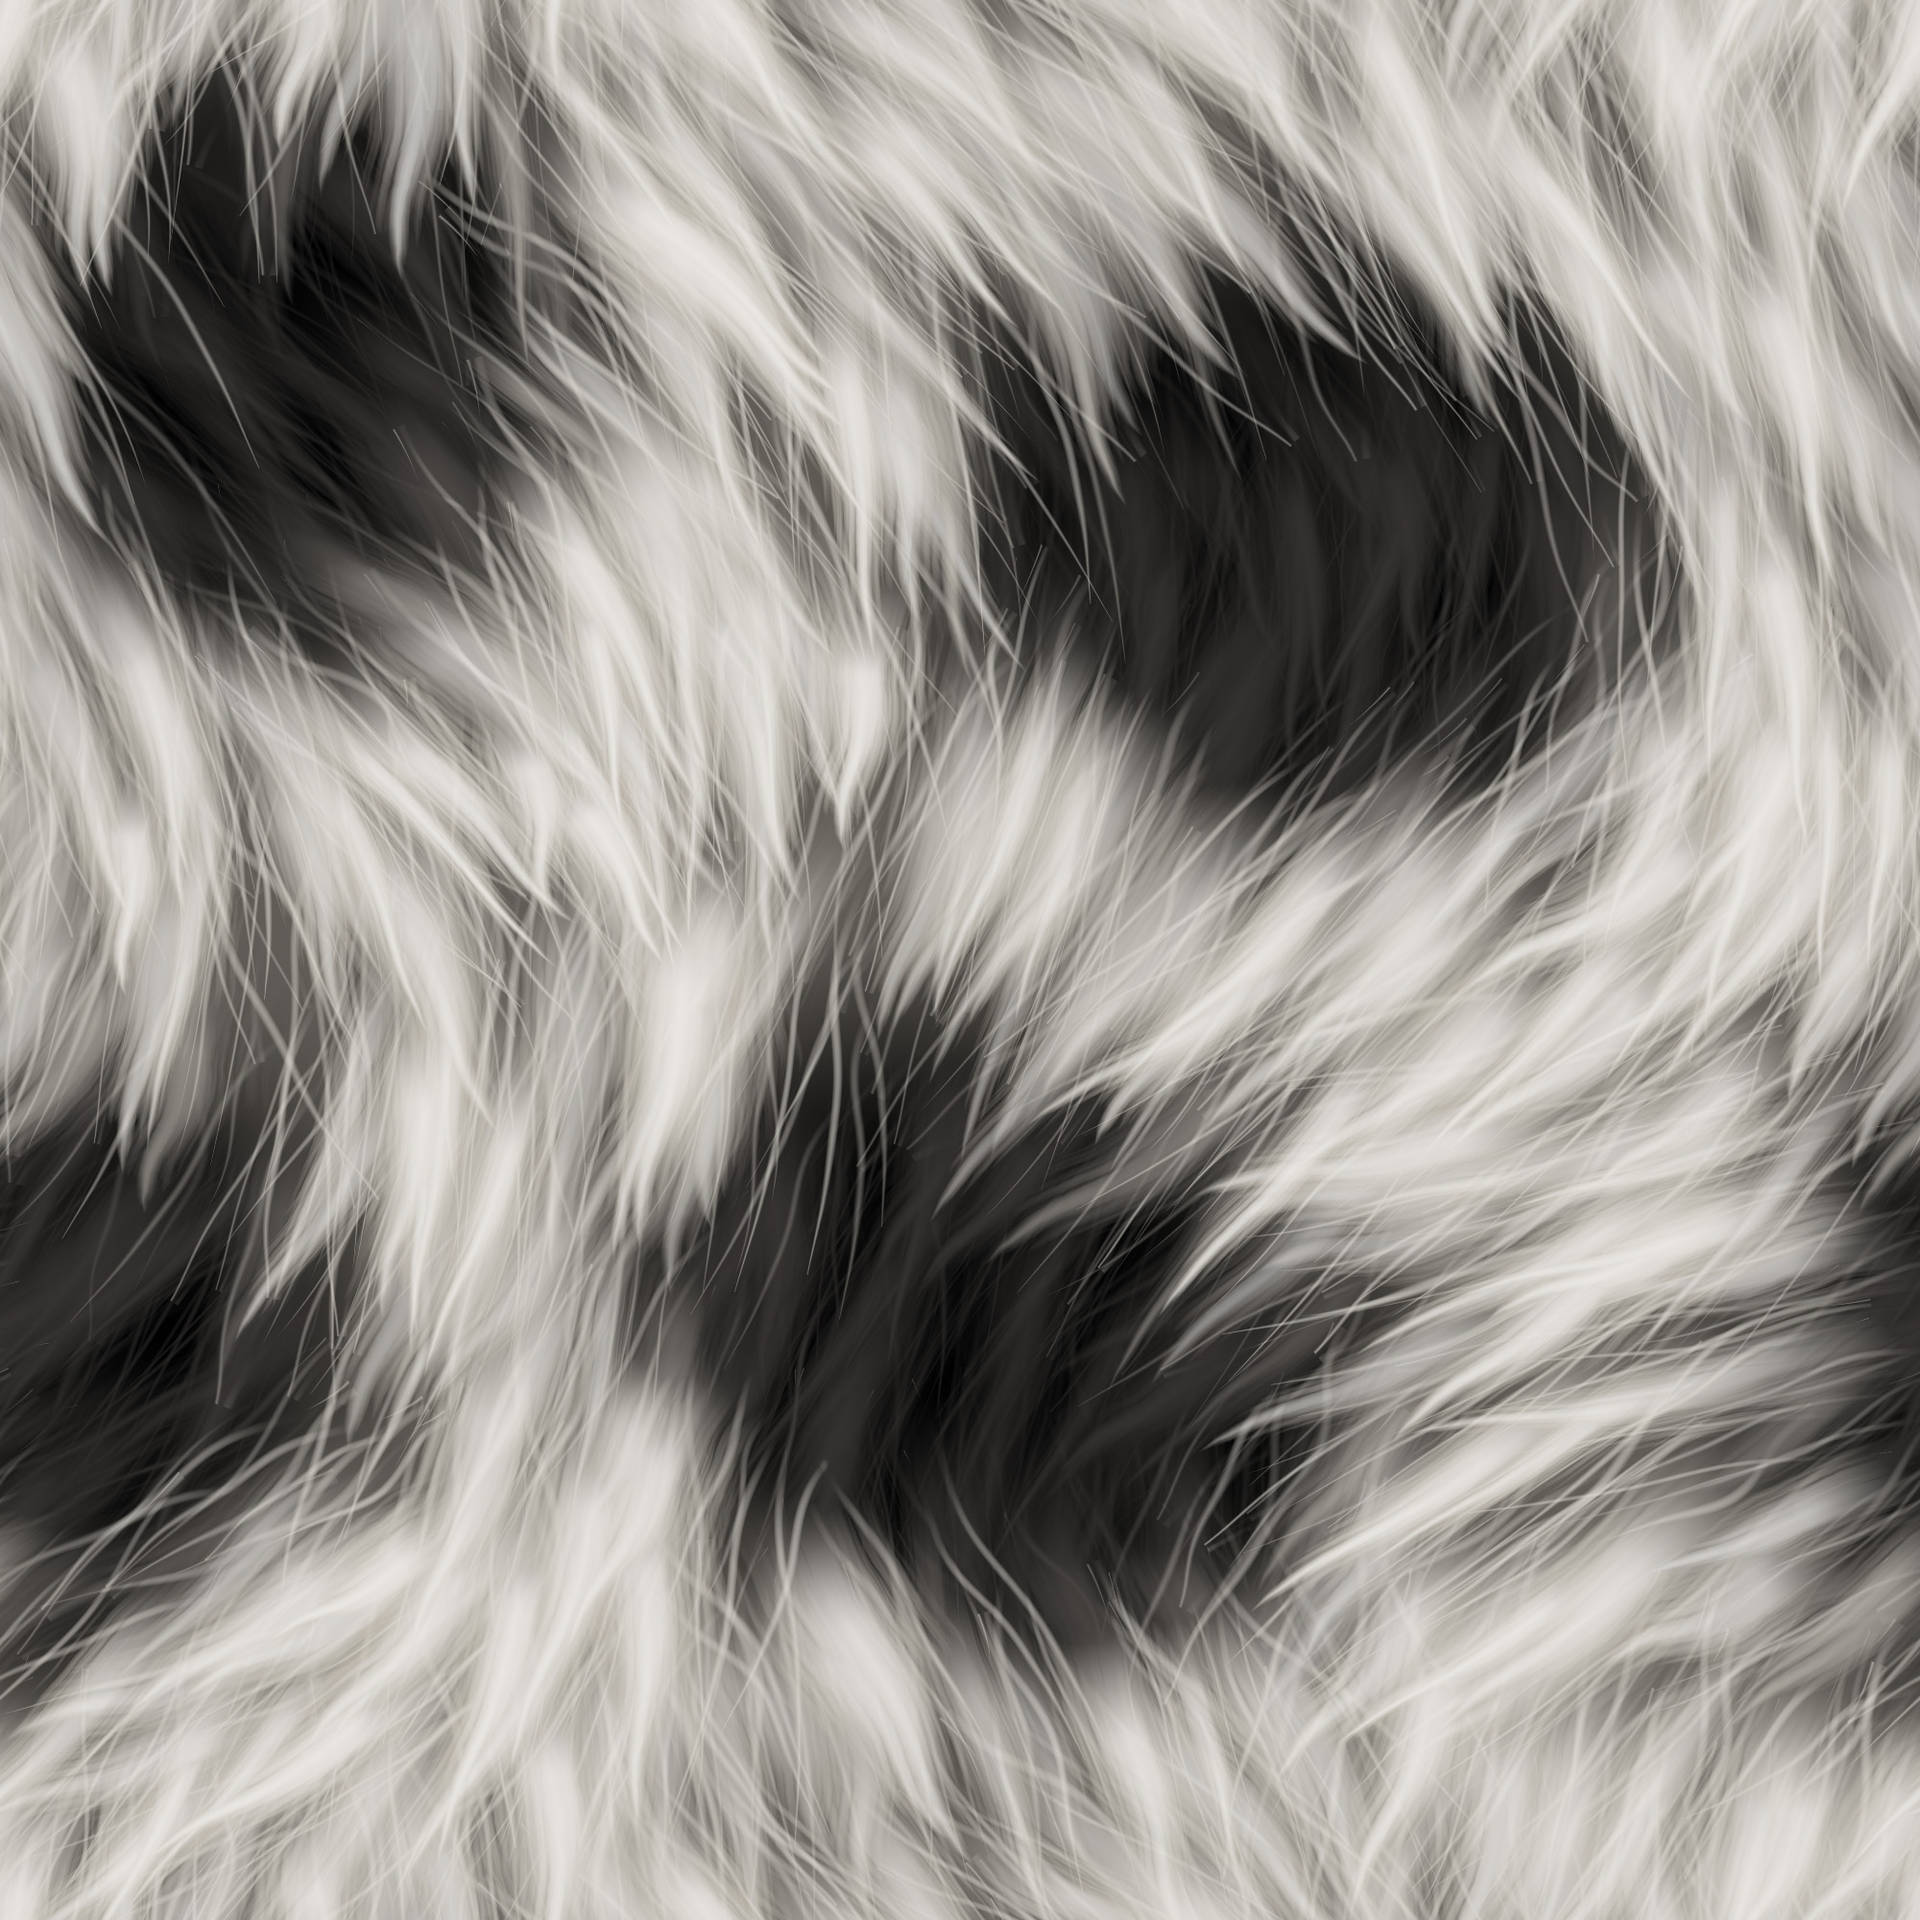 Animal Fur Digital Art Background